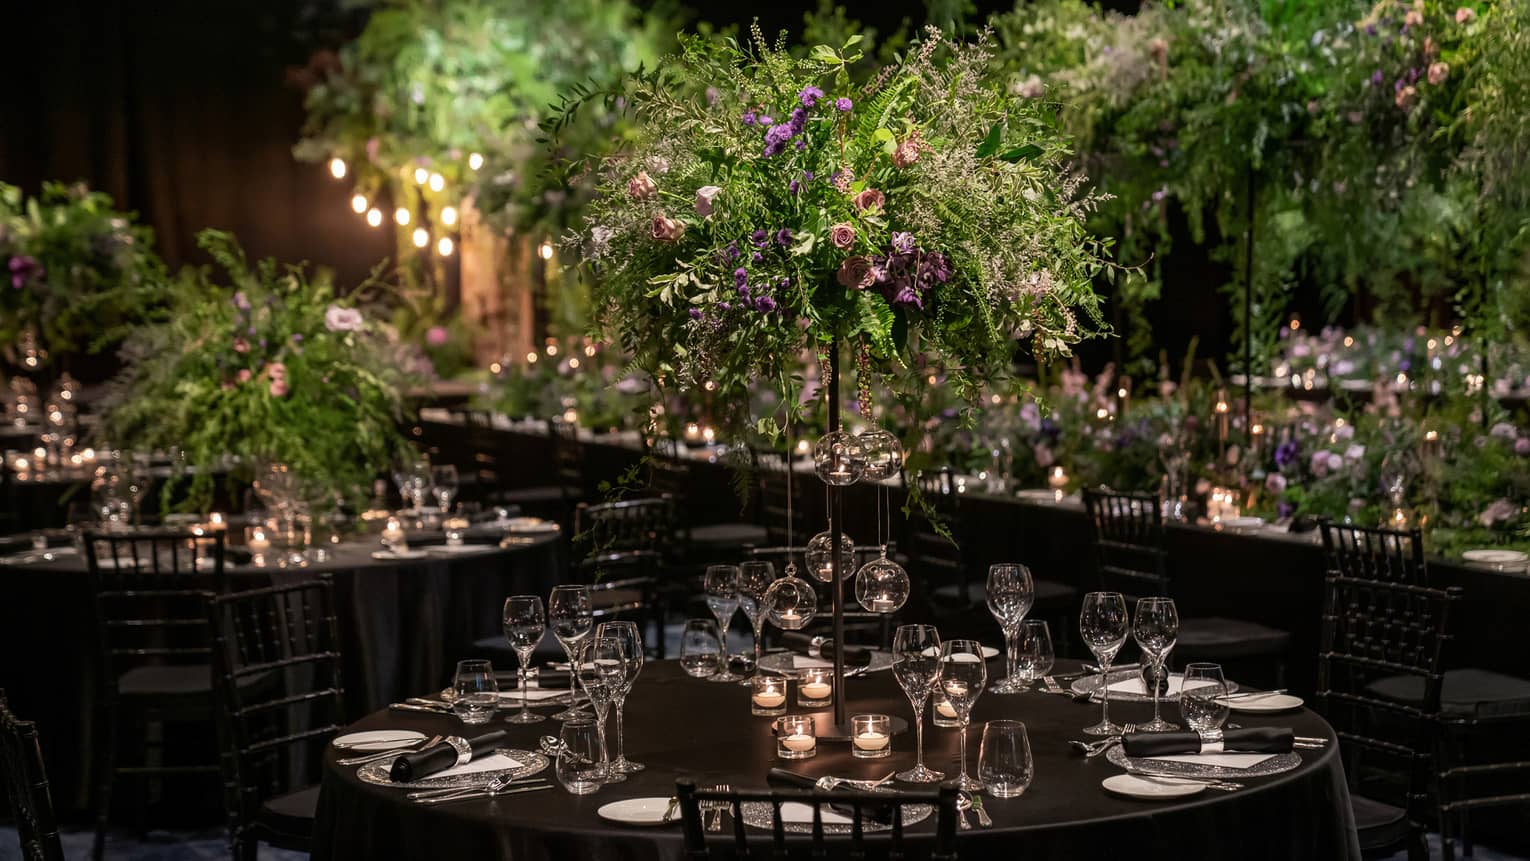 Wedding reception venue with fresh flowers and dark colour scheme